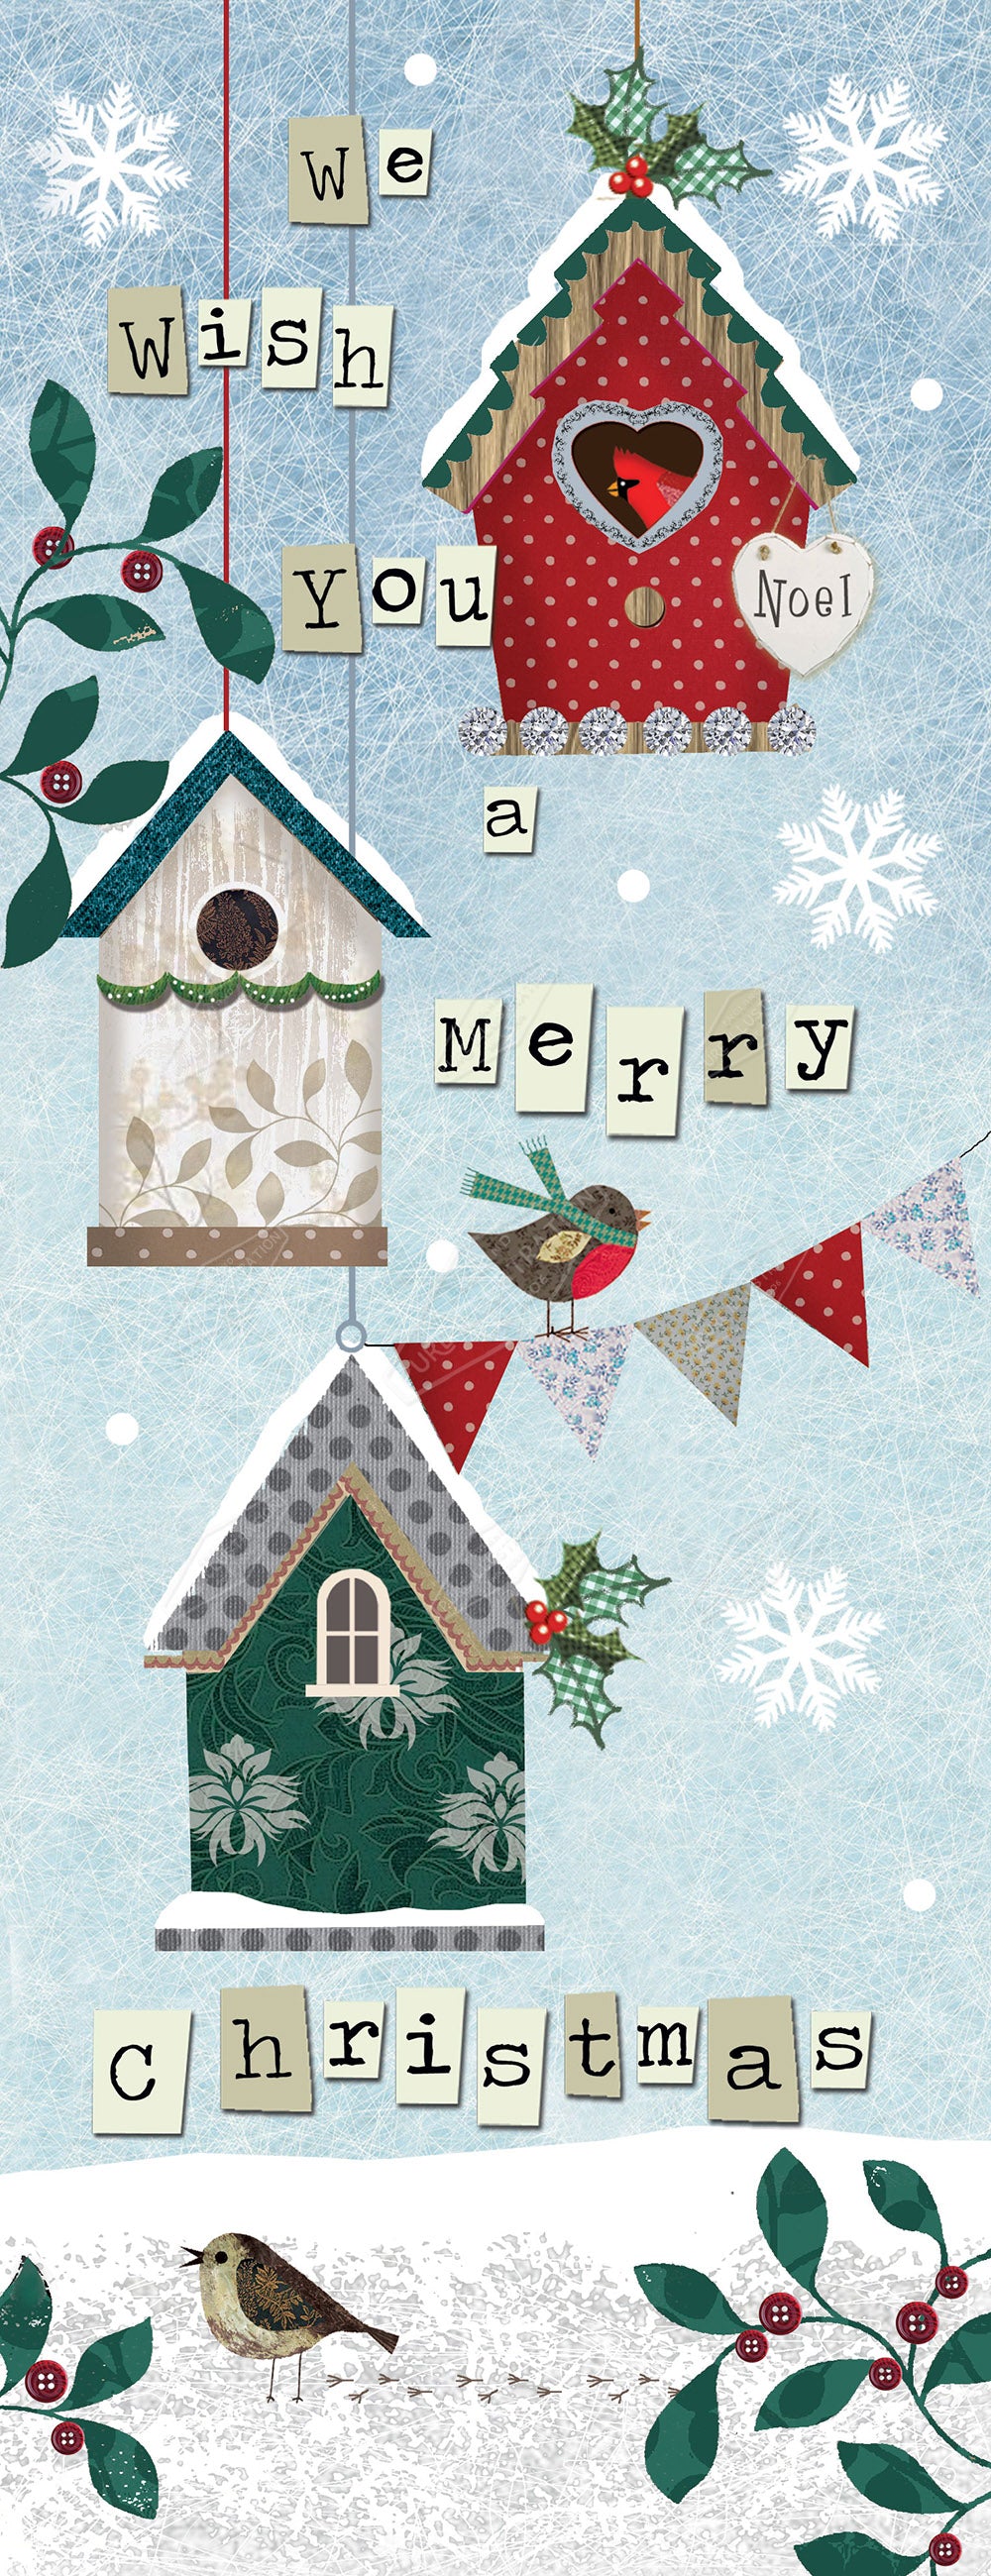 00027784DEV - Deva Evans is represented by Pure Art Licensing Agency - Christmas Greeting Card Design